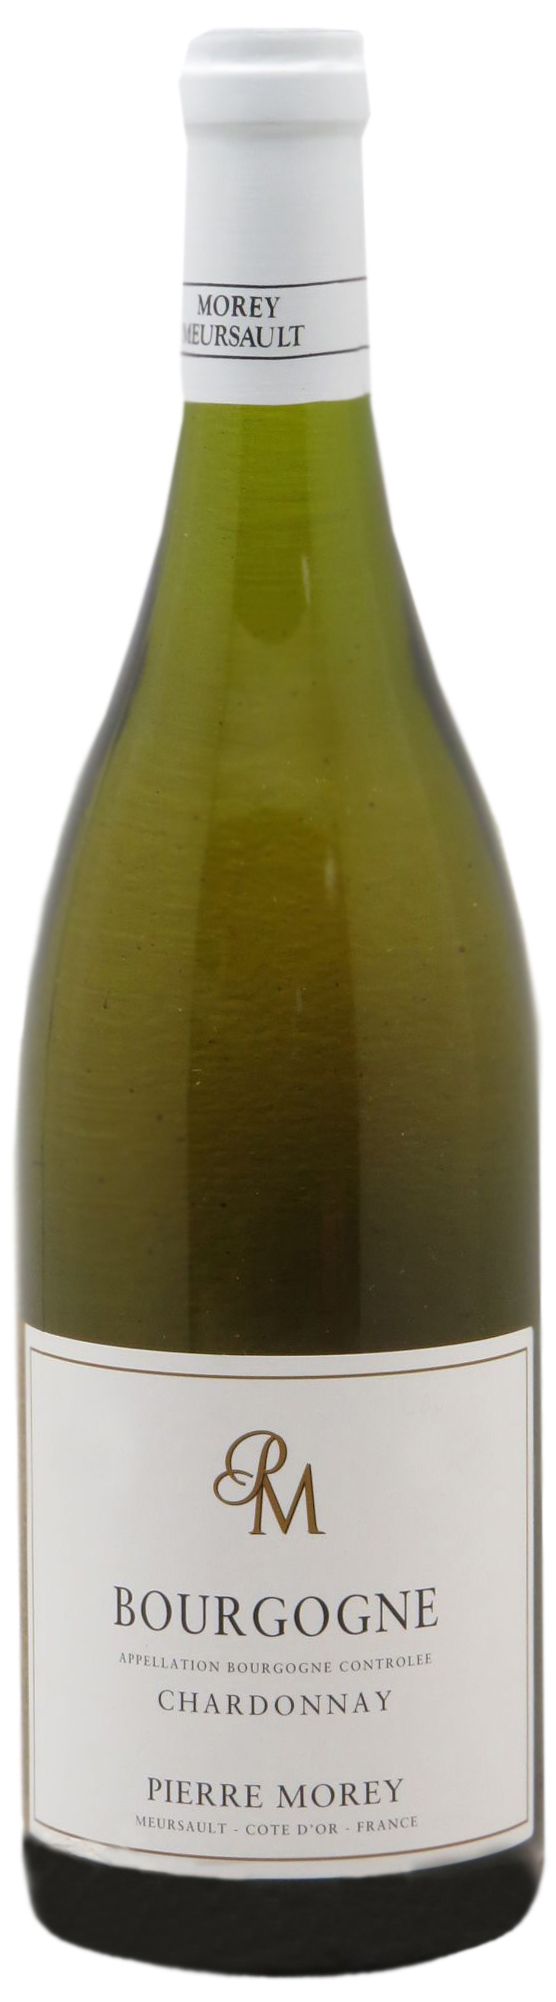 Domaine Pierre Morey & Morey-Blanc, Bourgogne Chardonnay, 2009